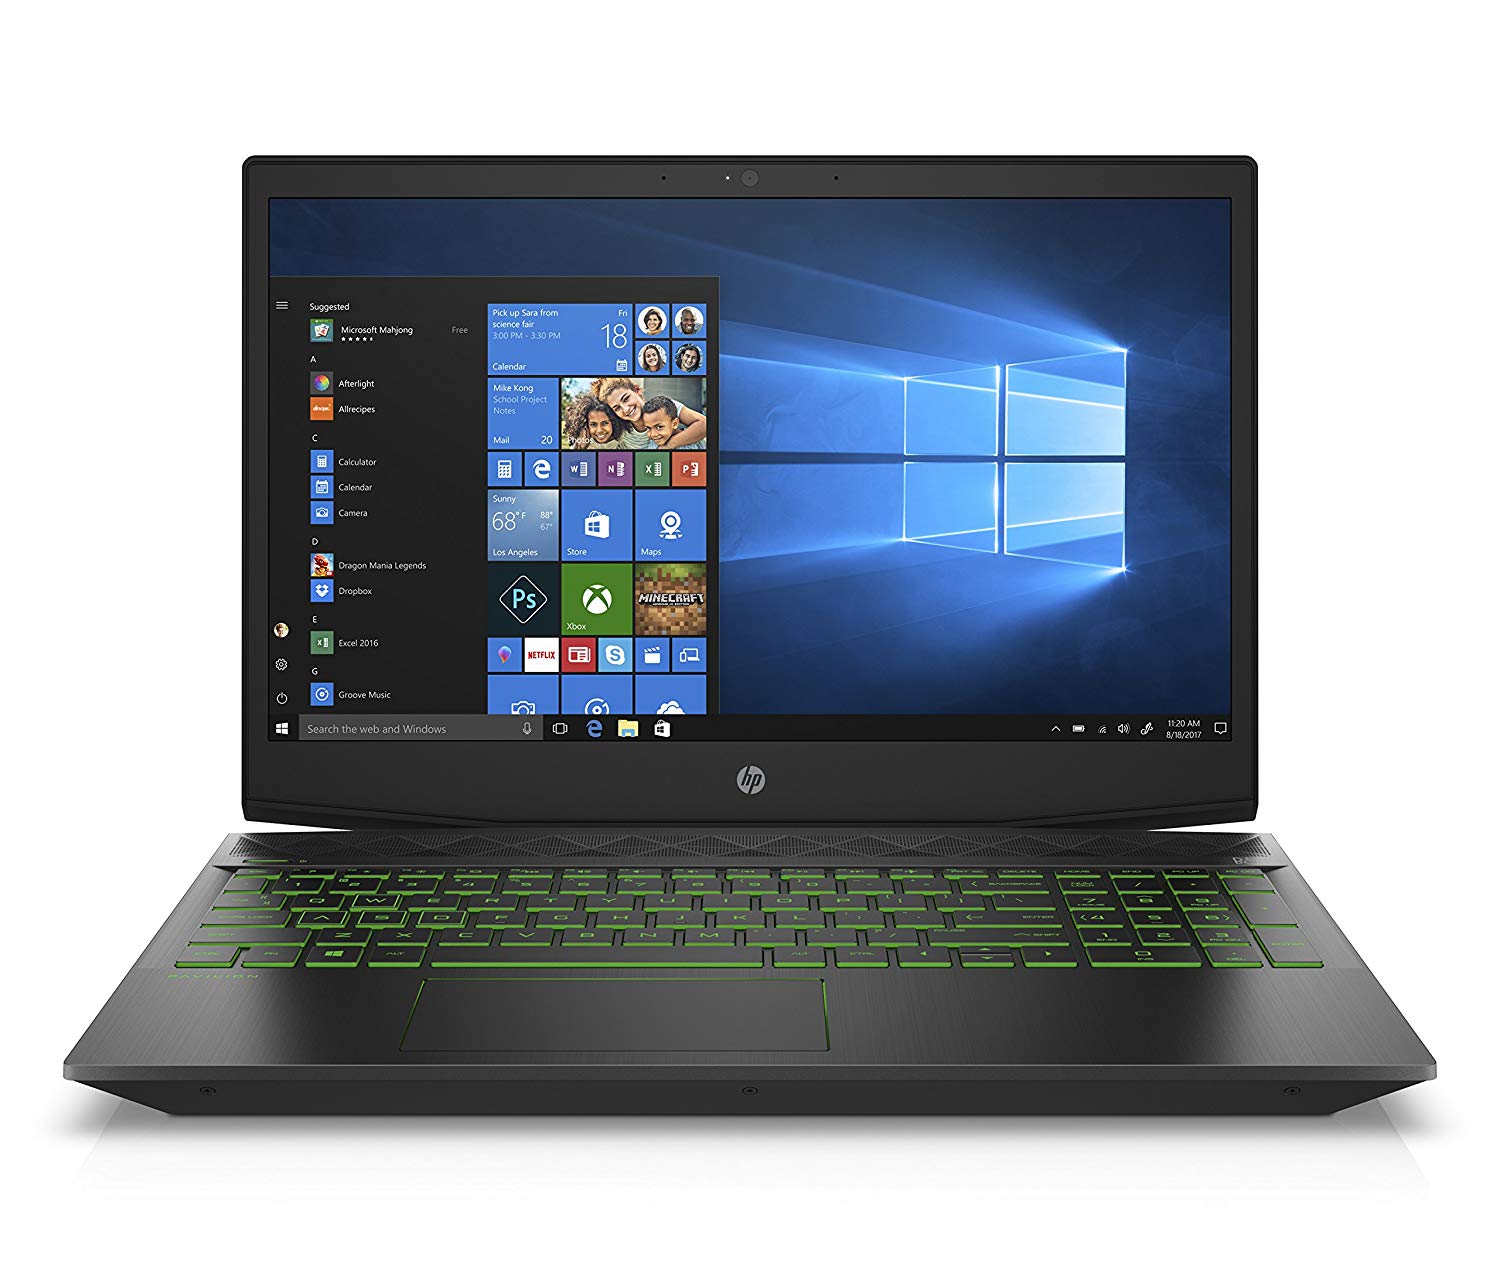 Buy HP Pavilion Gaming Laptop,15.6" FHD IPS, Intel 8th Gen i5+8300H, NVIDIA GTX 1050Ti 4GB, 8GB